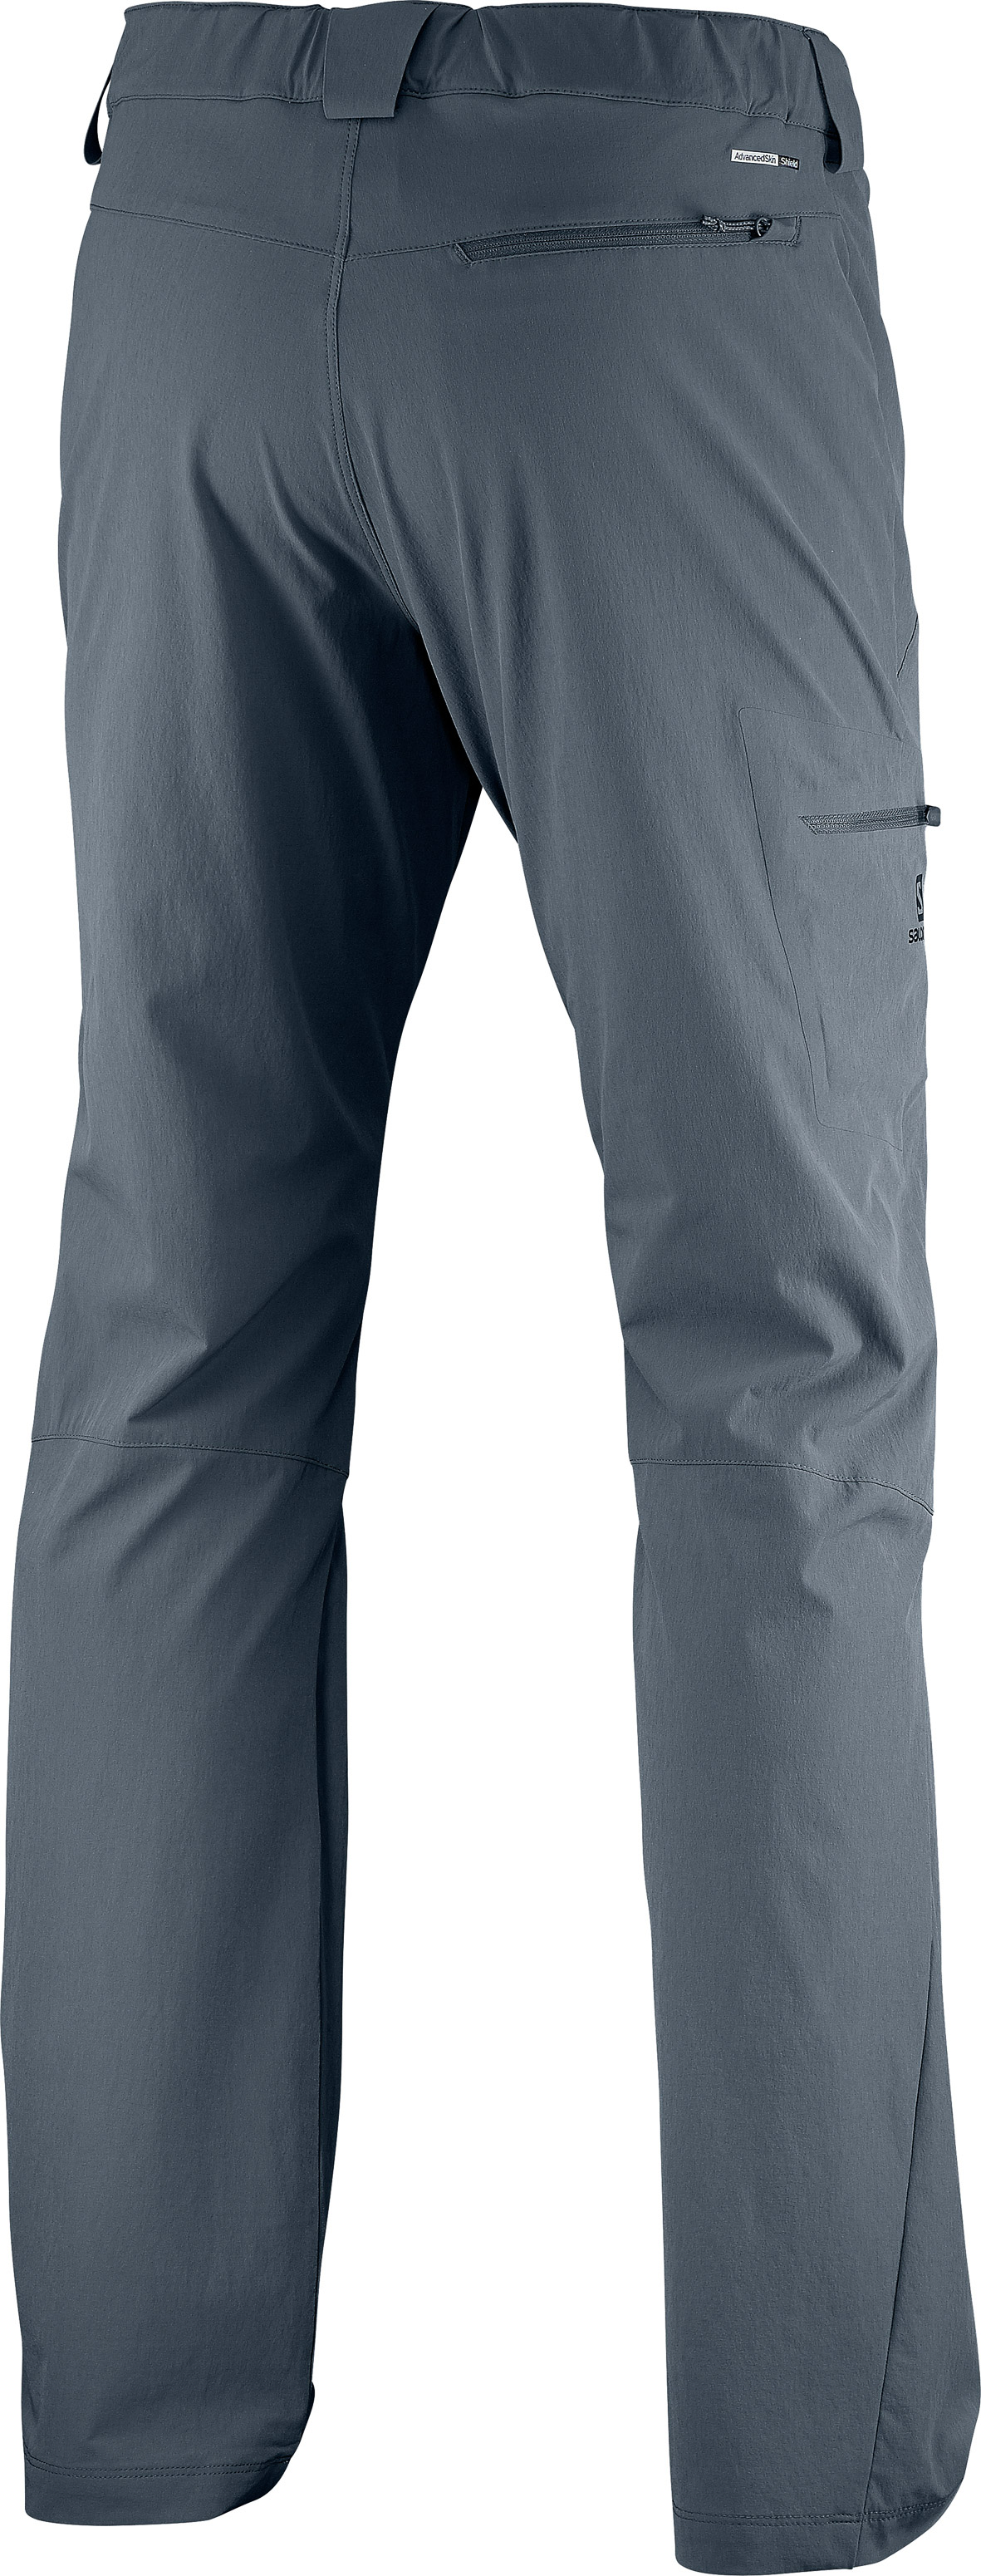 Salomon trousers